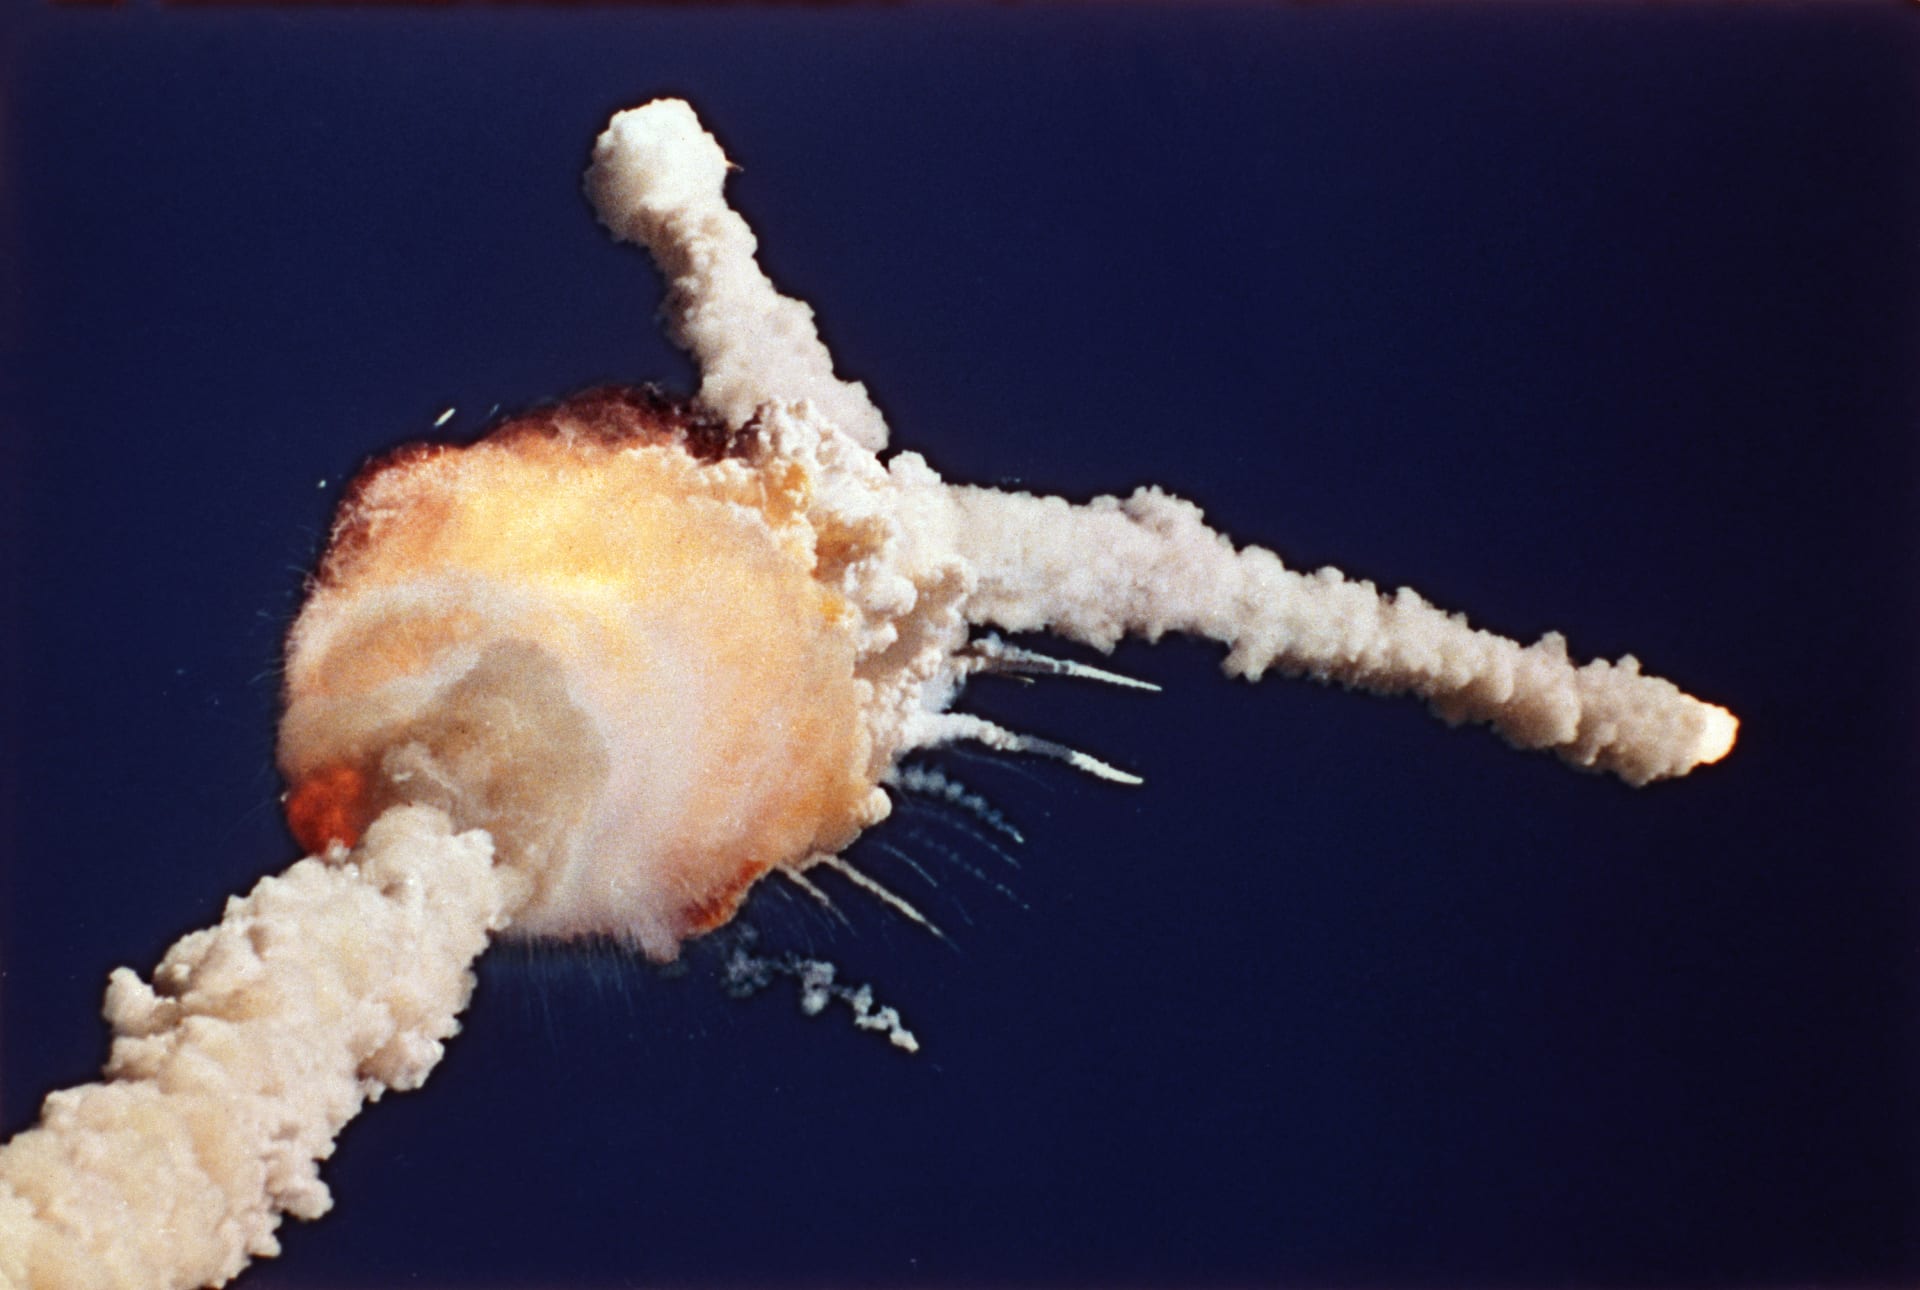 Exploze raketoplánu Challenger